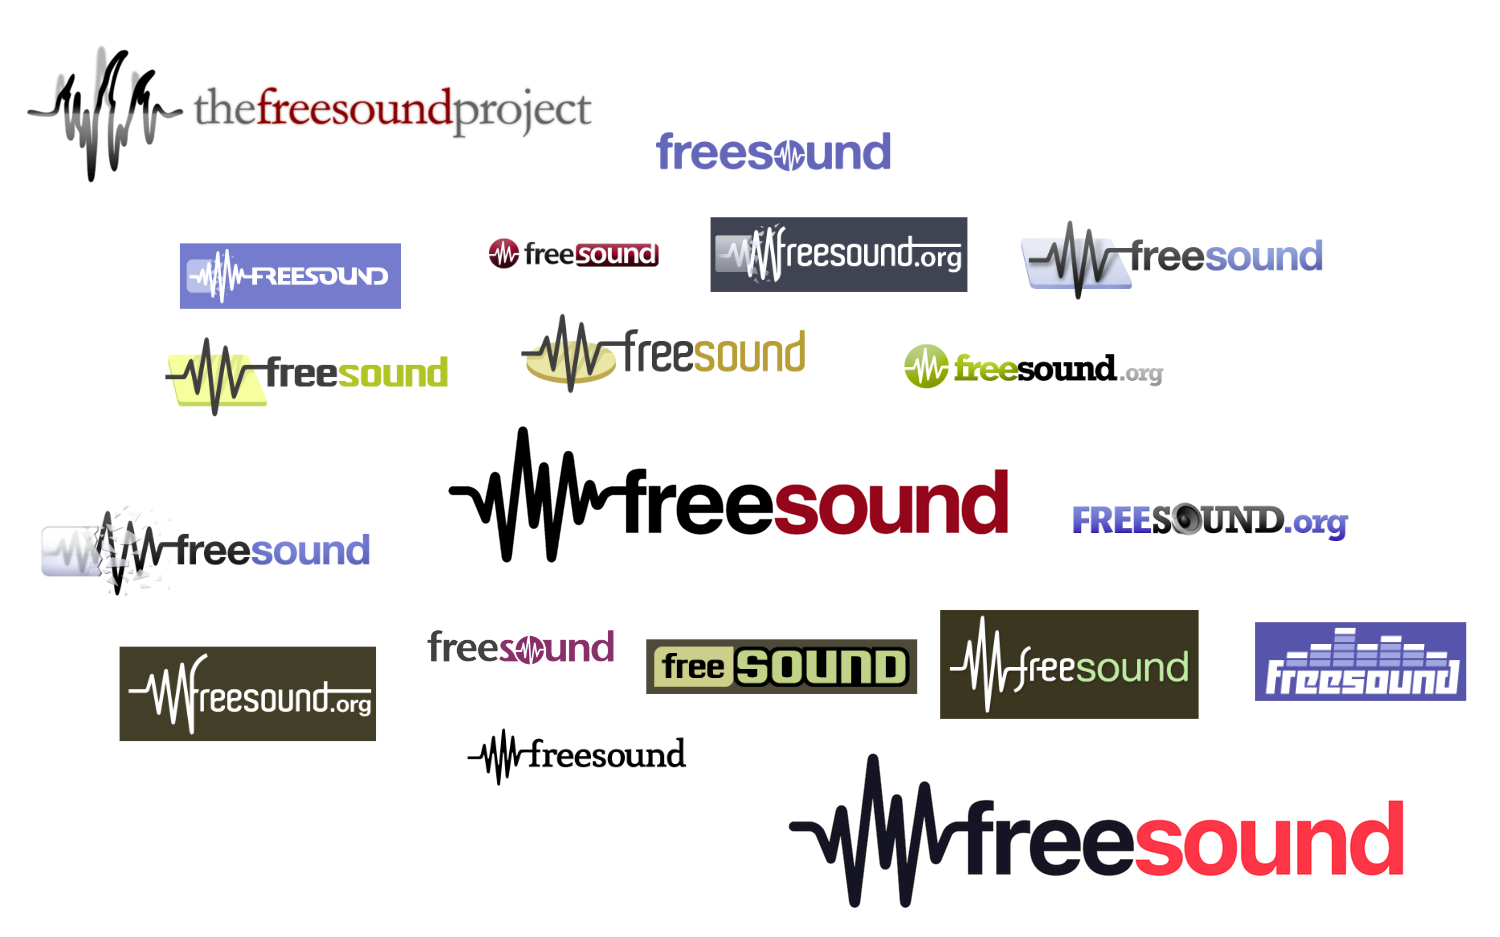 Freesound Live. Freesound logo. Freesound org